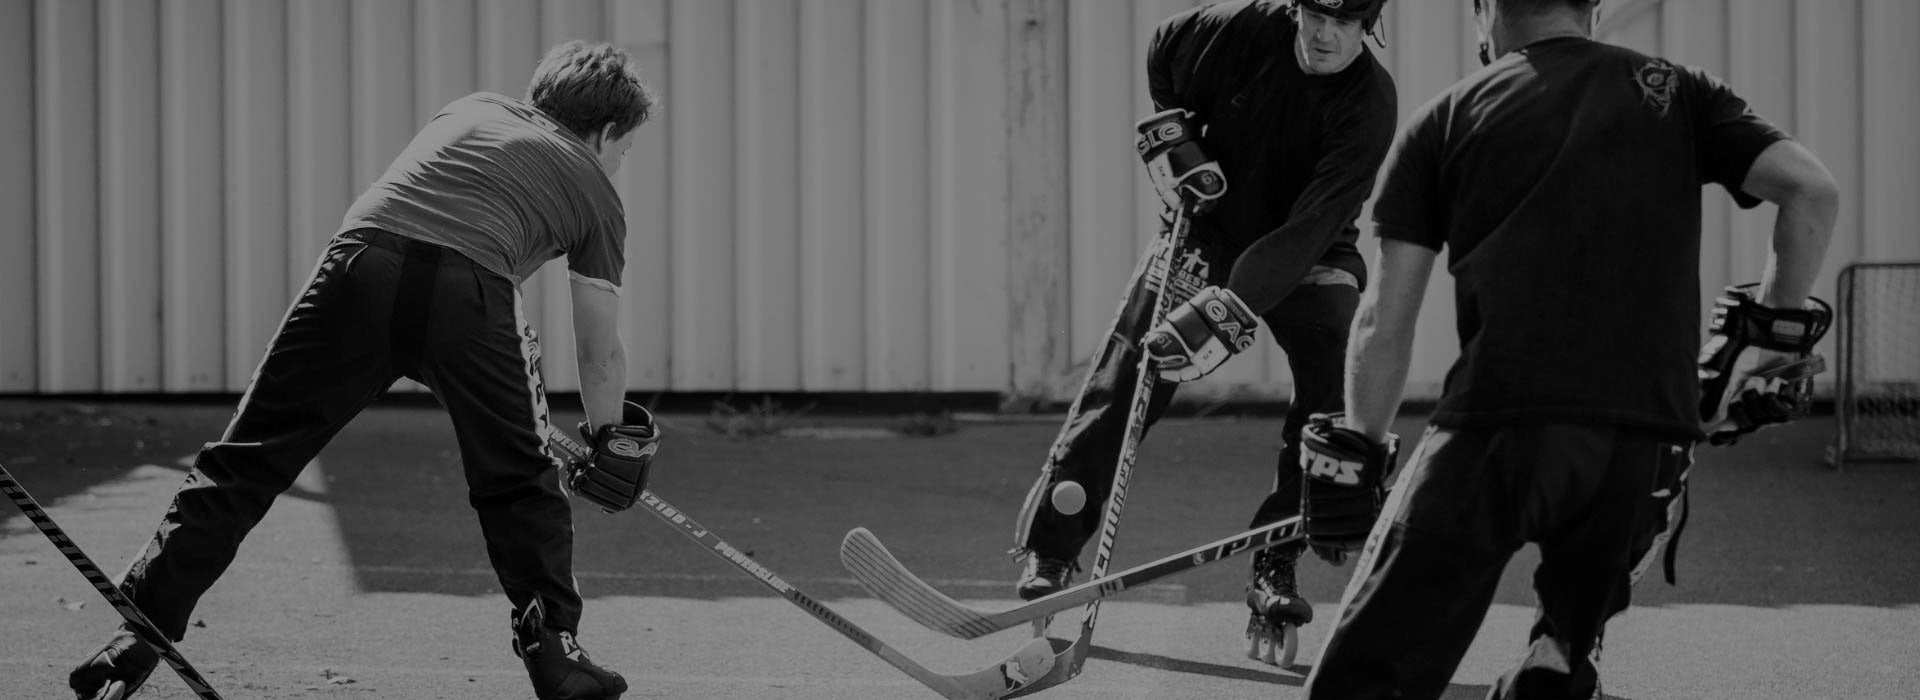 Three men playing street hockey holding sticks and wearing Powerslide inline hockey skates